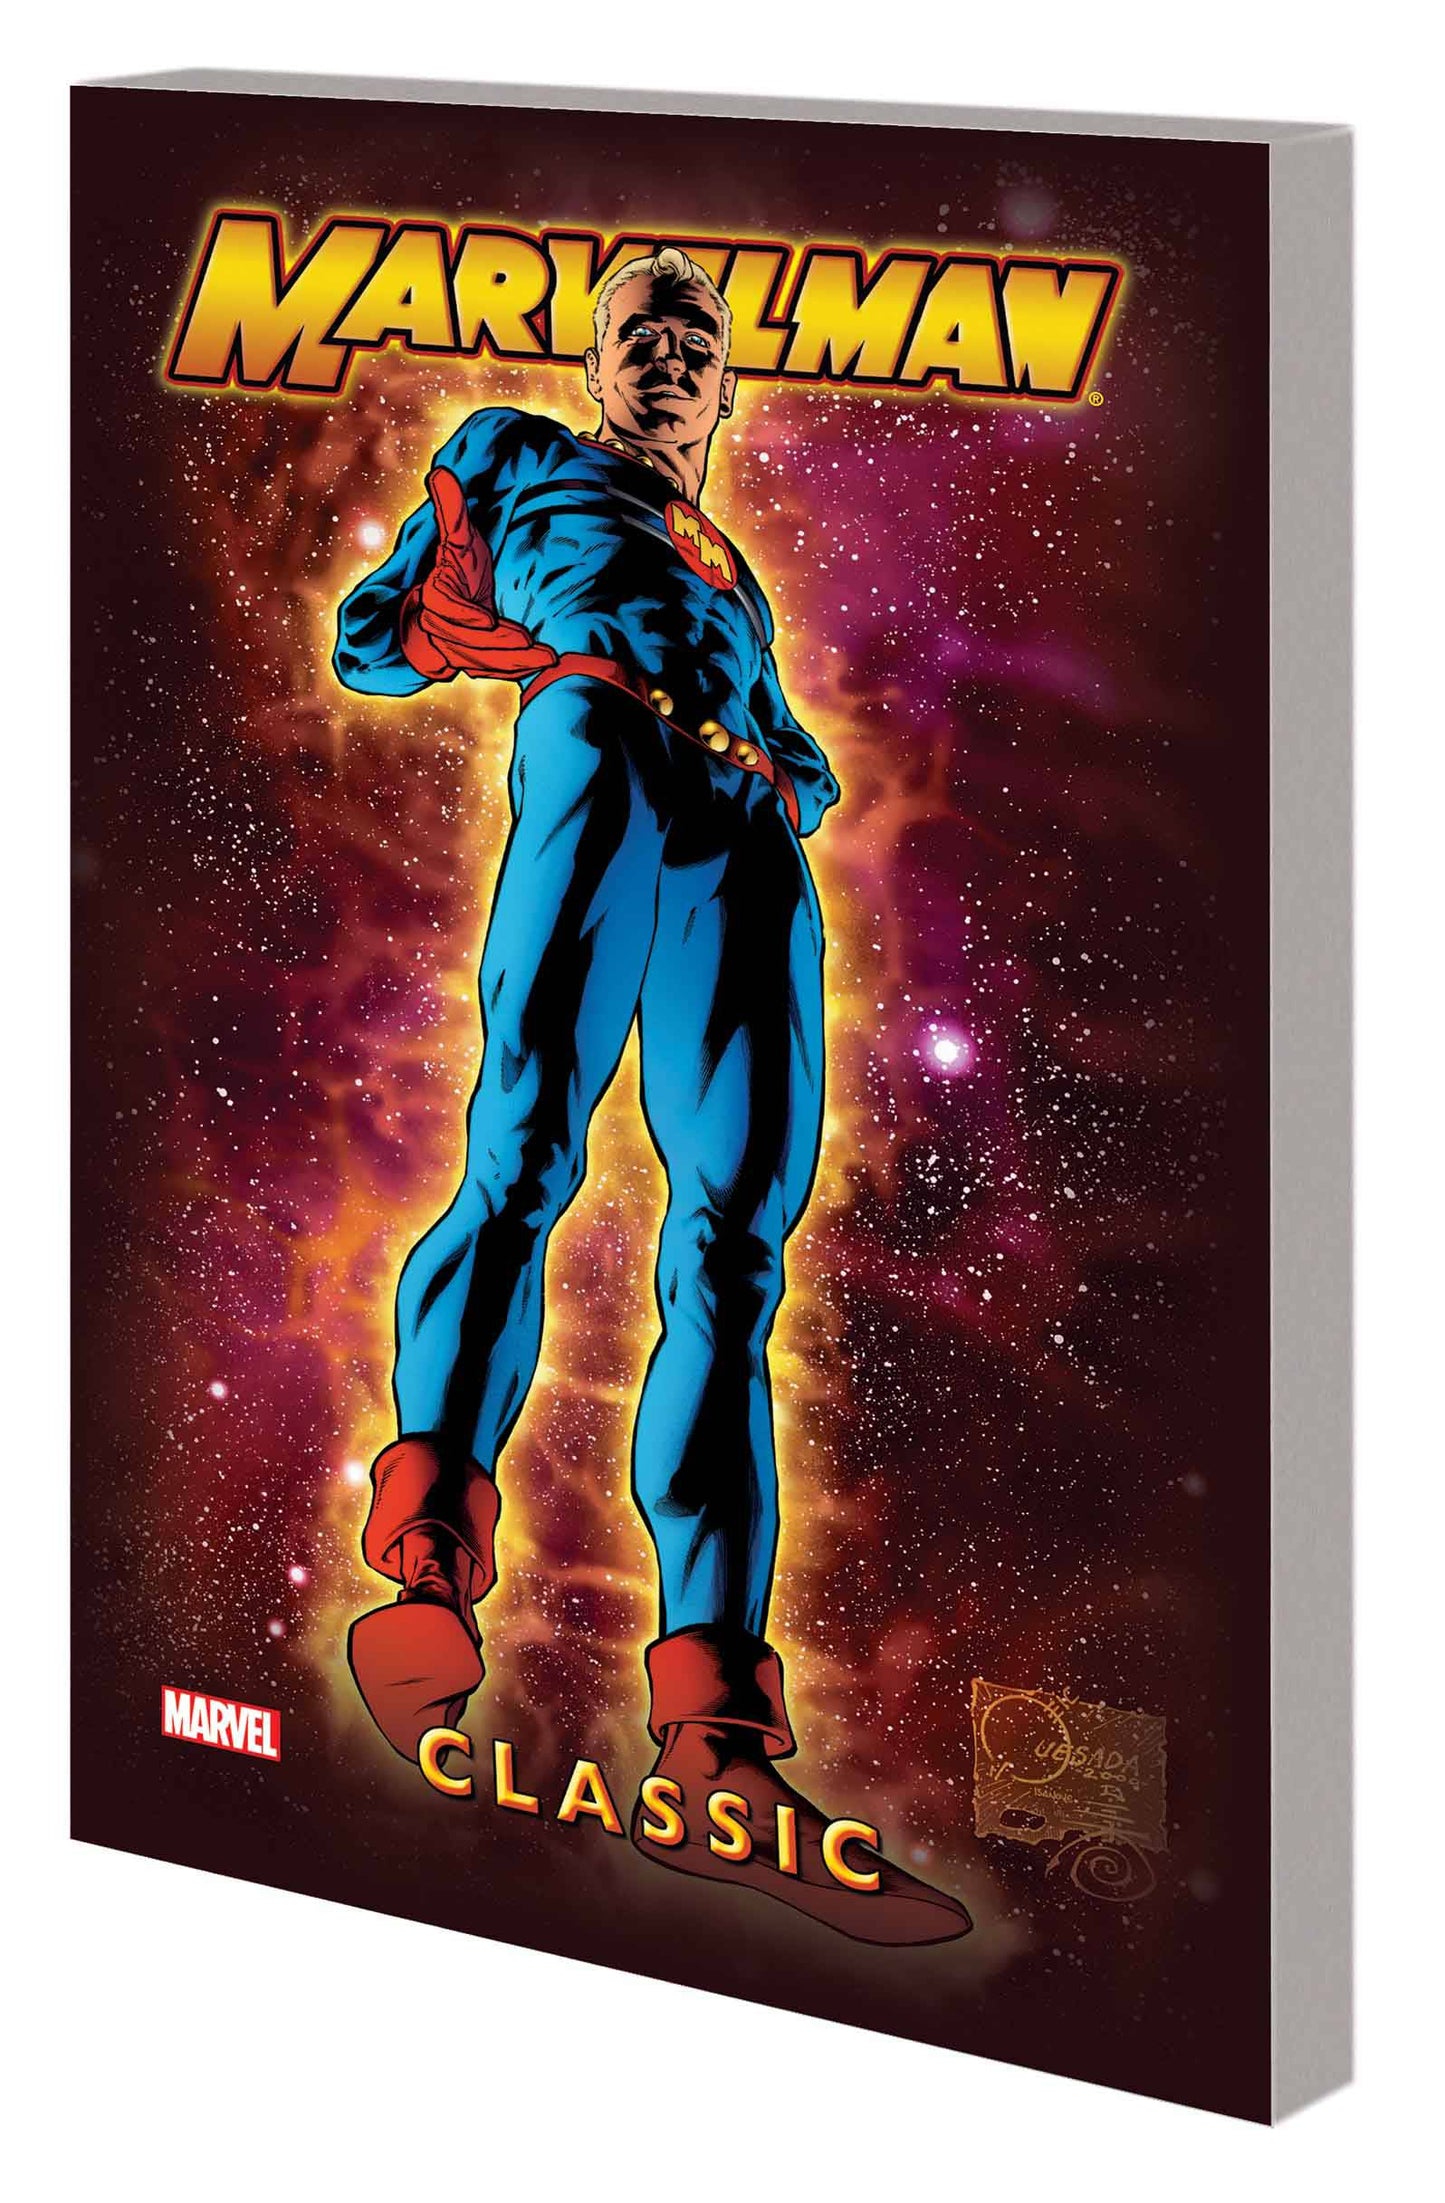 Marvelman Classic Vol. 01